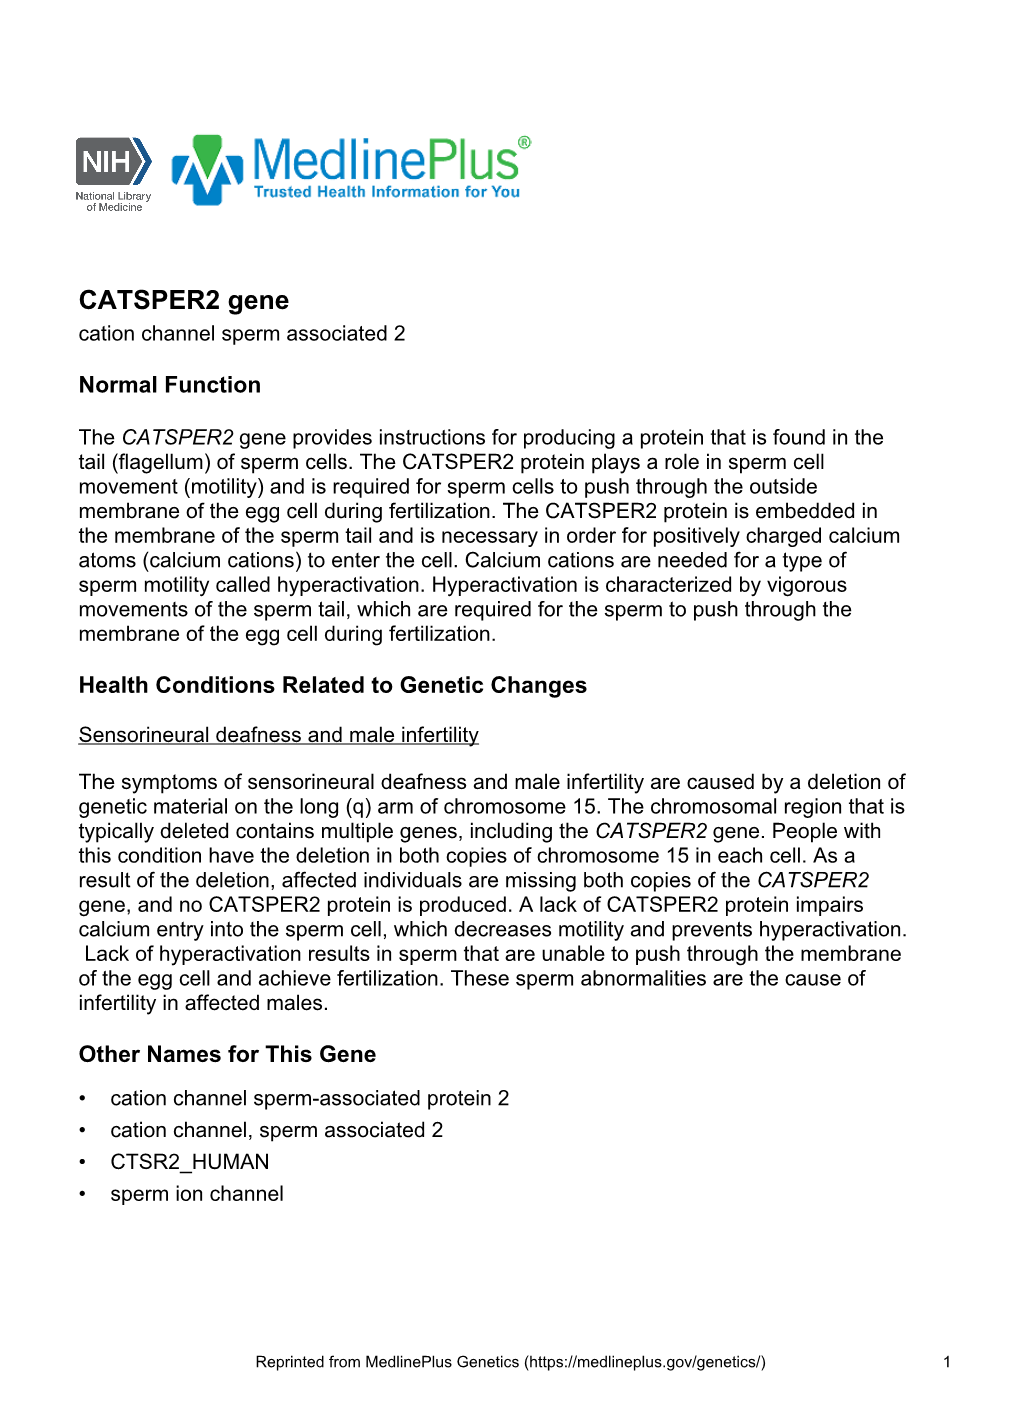 CATSPER2 Gene Cation Channel Sperm Associated 2